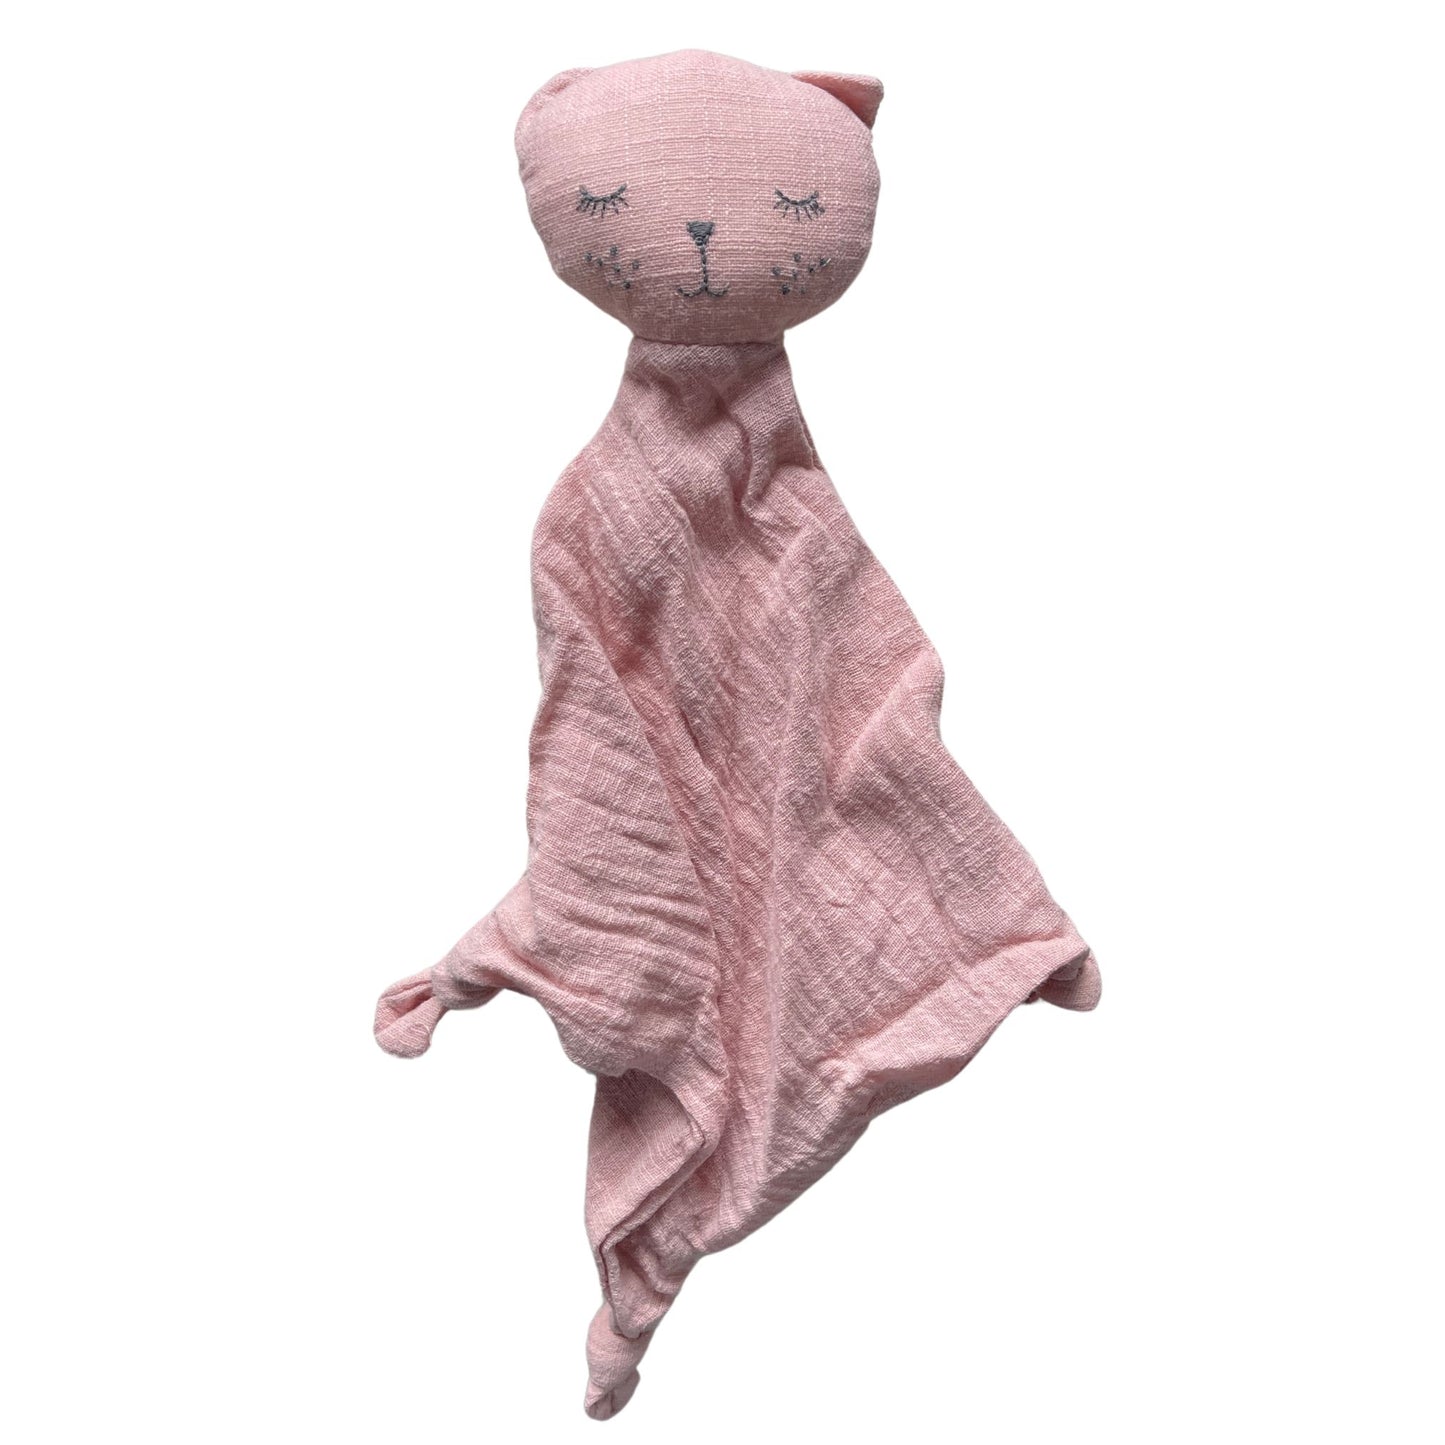 Rose the cat comforter for babies. Beautiful pastel pink cotton cat comforter.